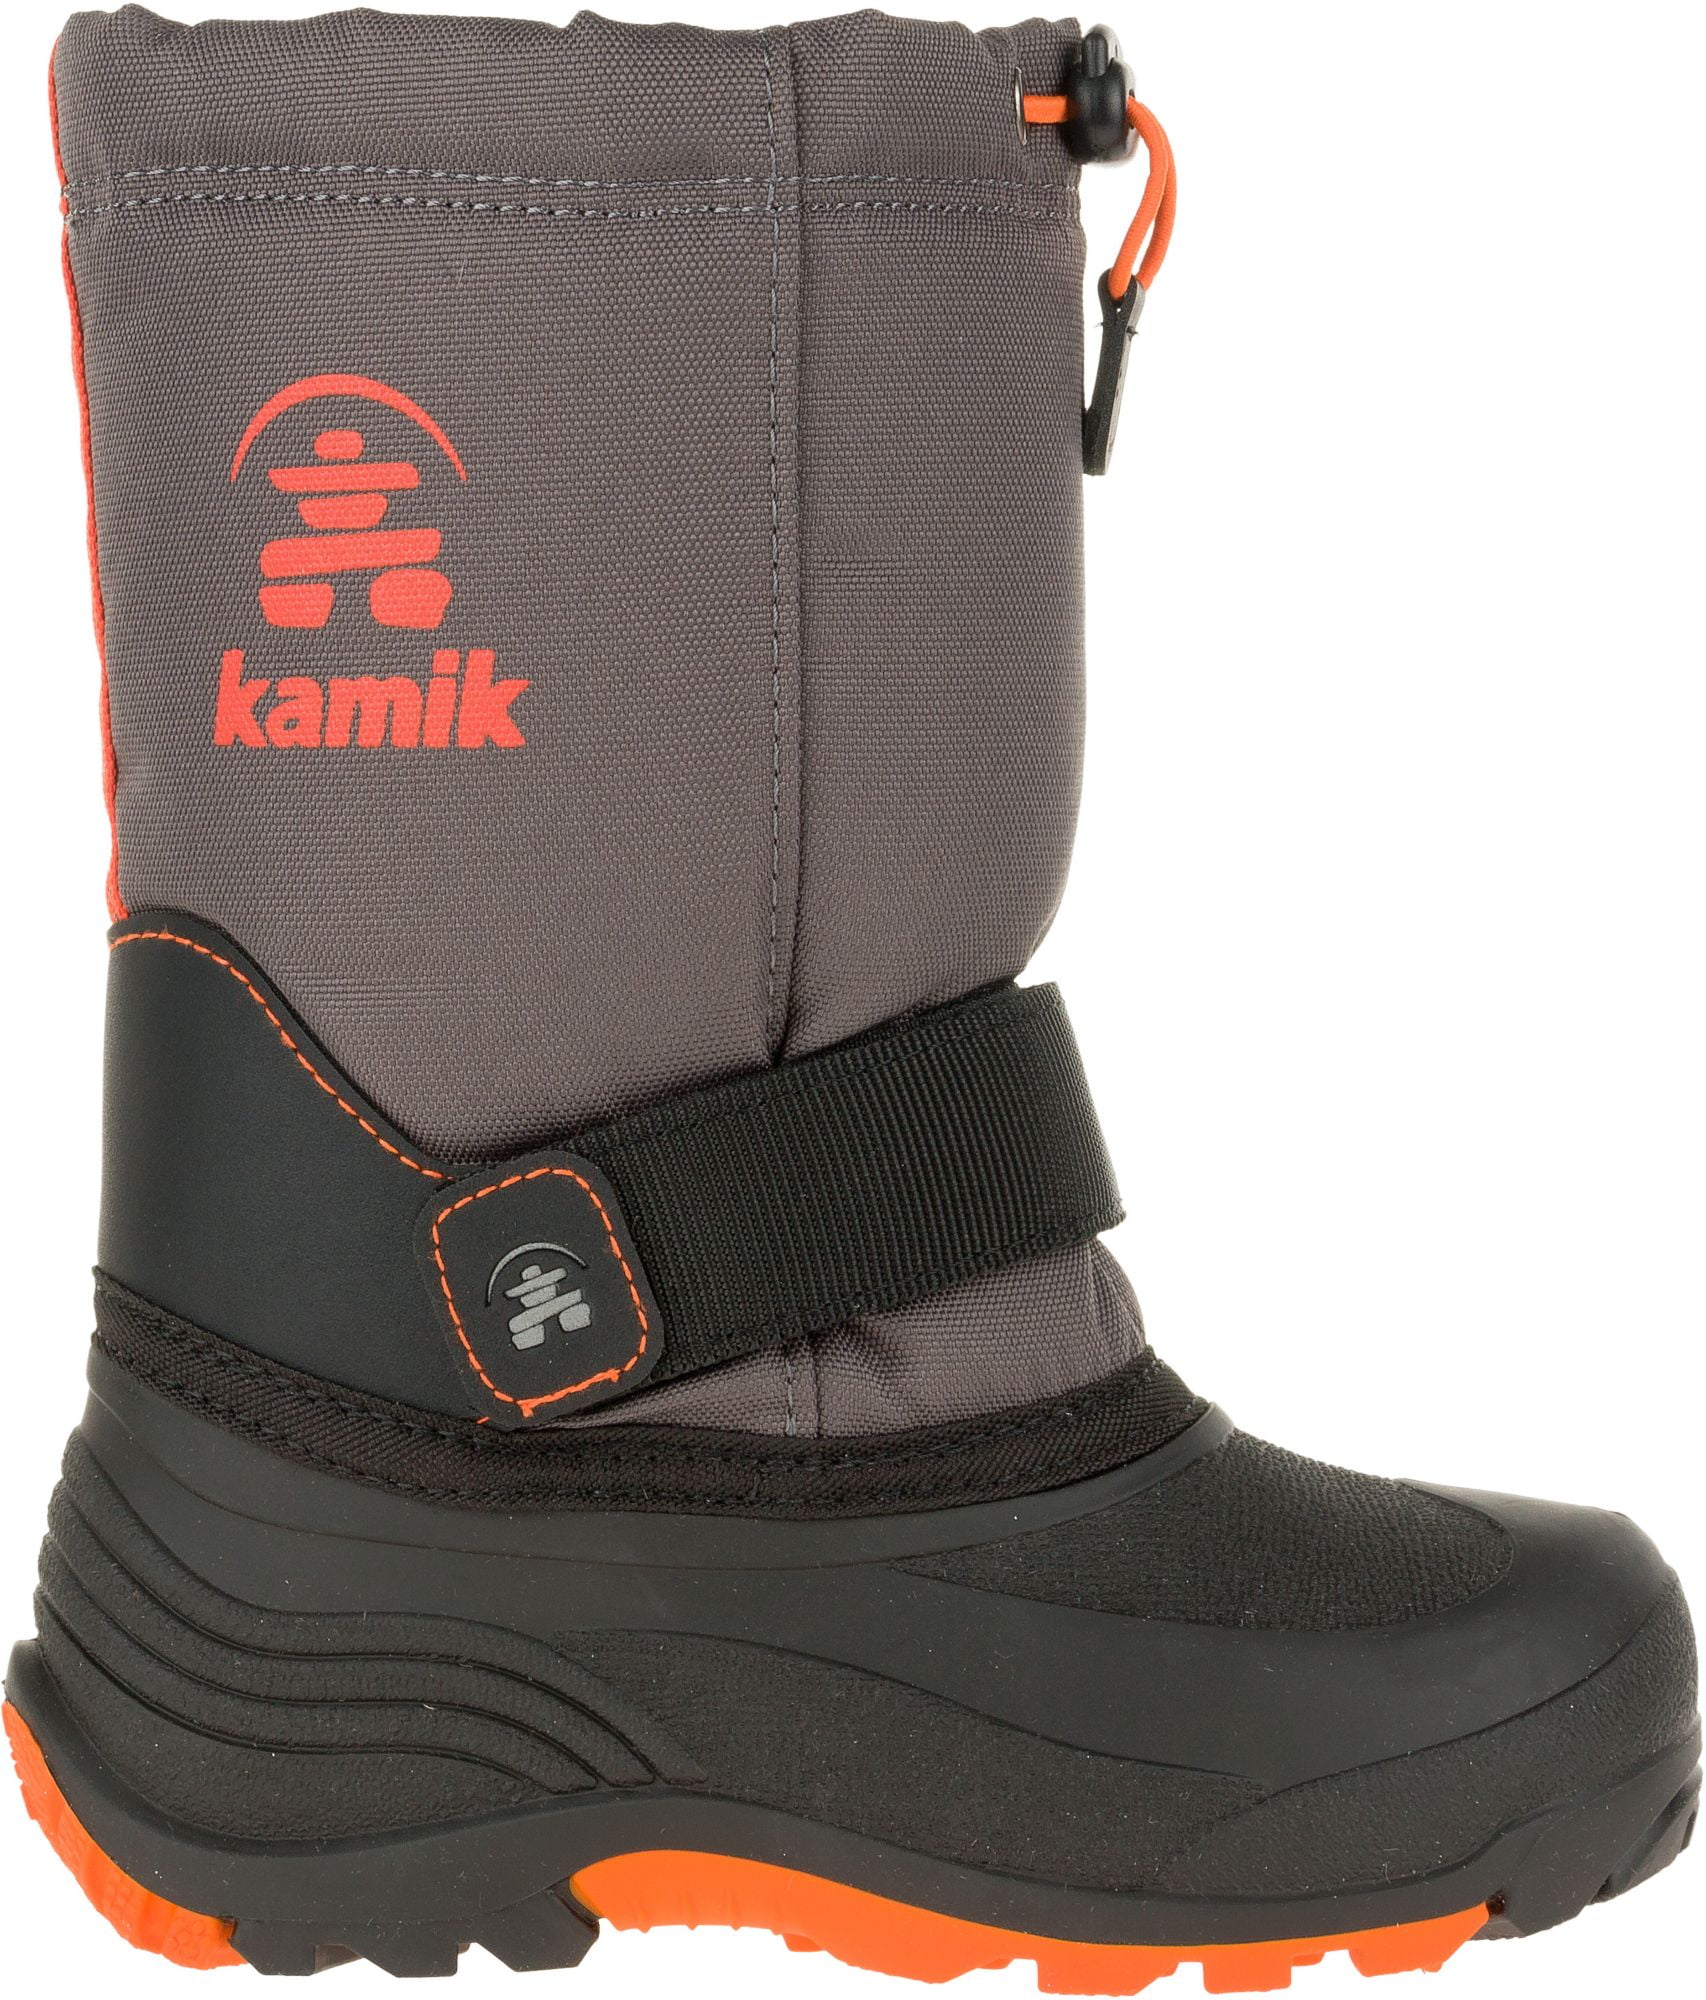 Kamik Children Toddler Rocket Insulated Waterproof Winter Boots Size 12 